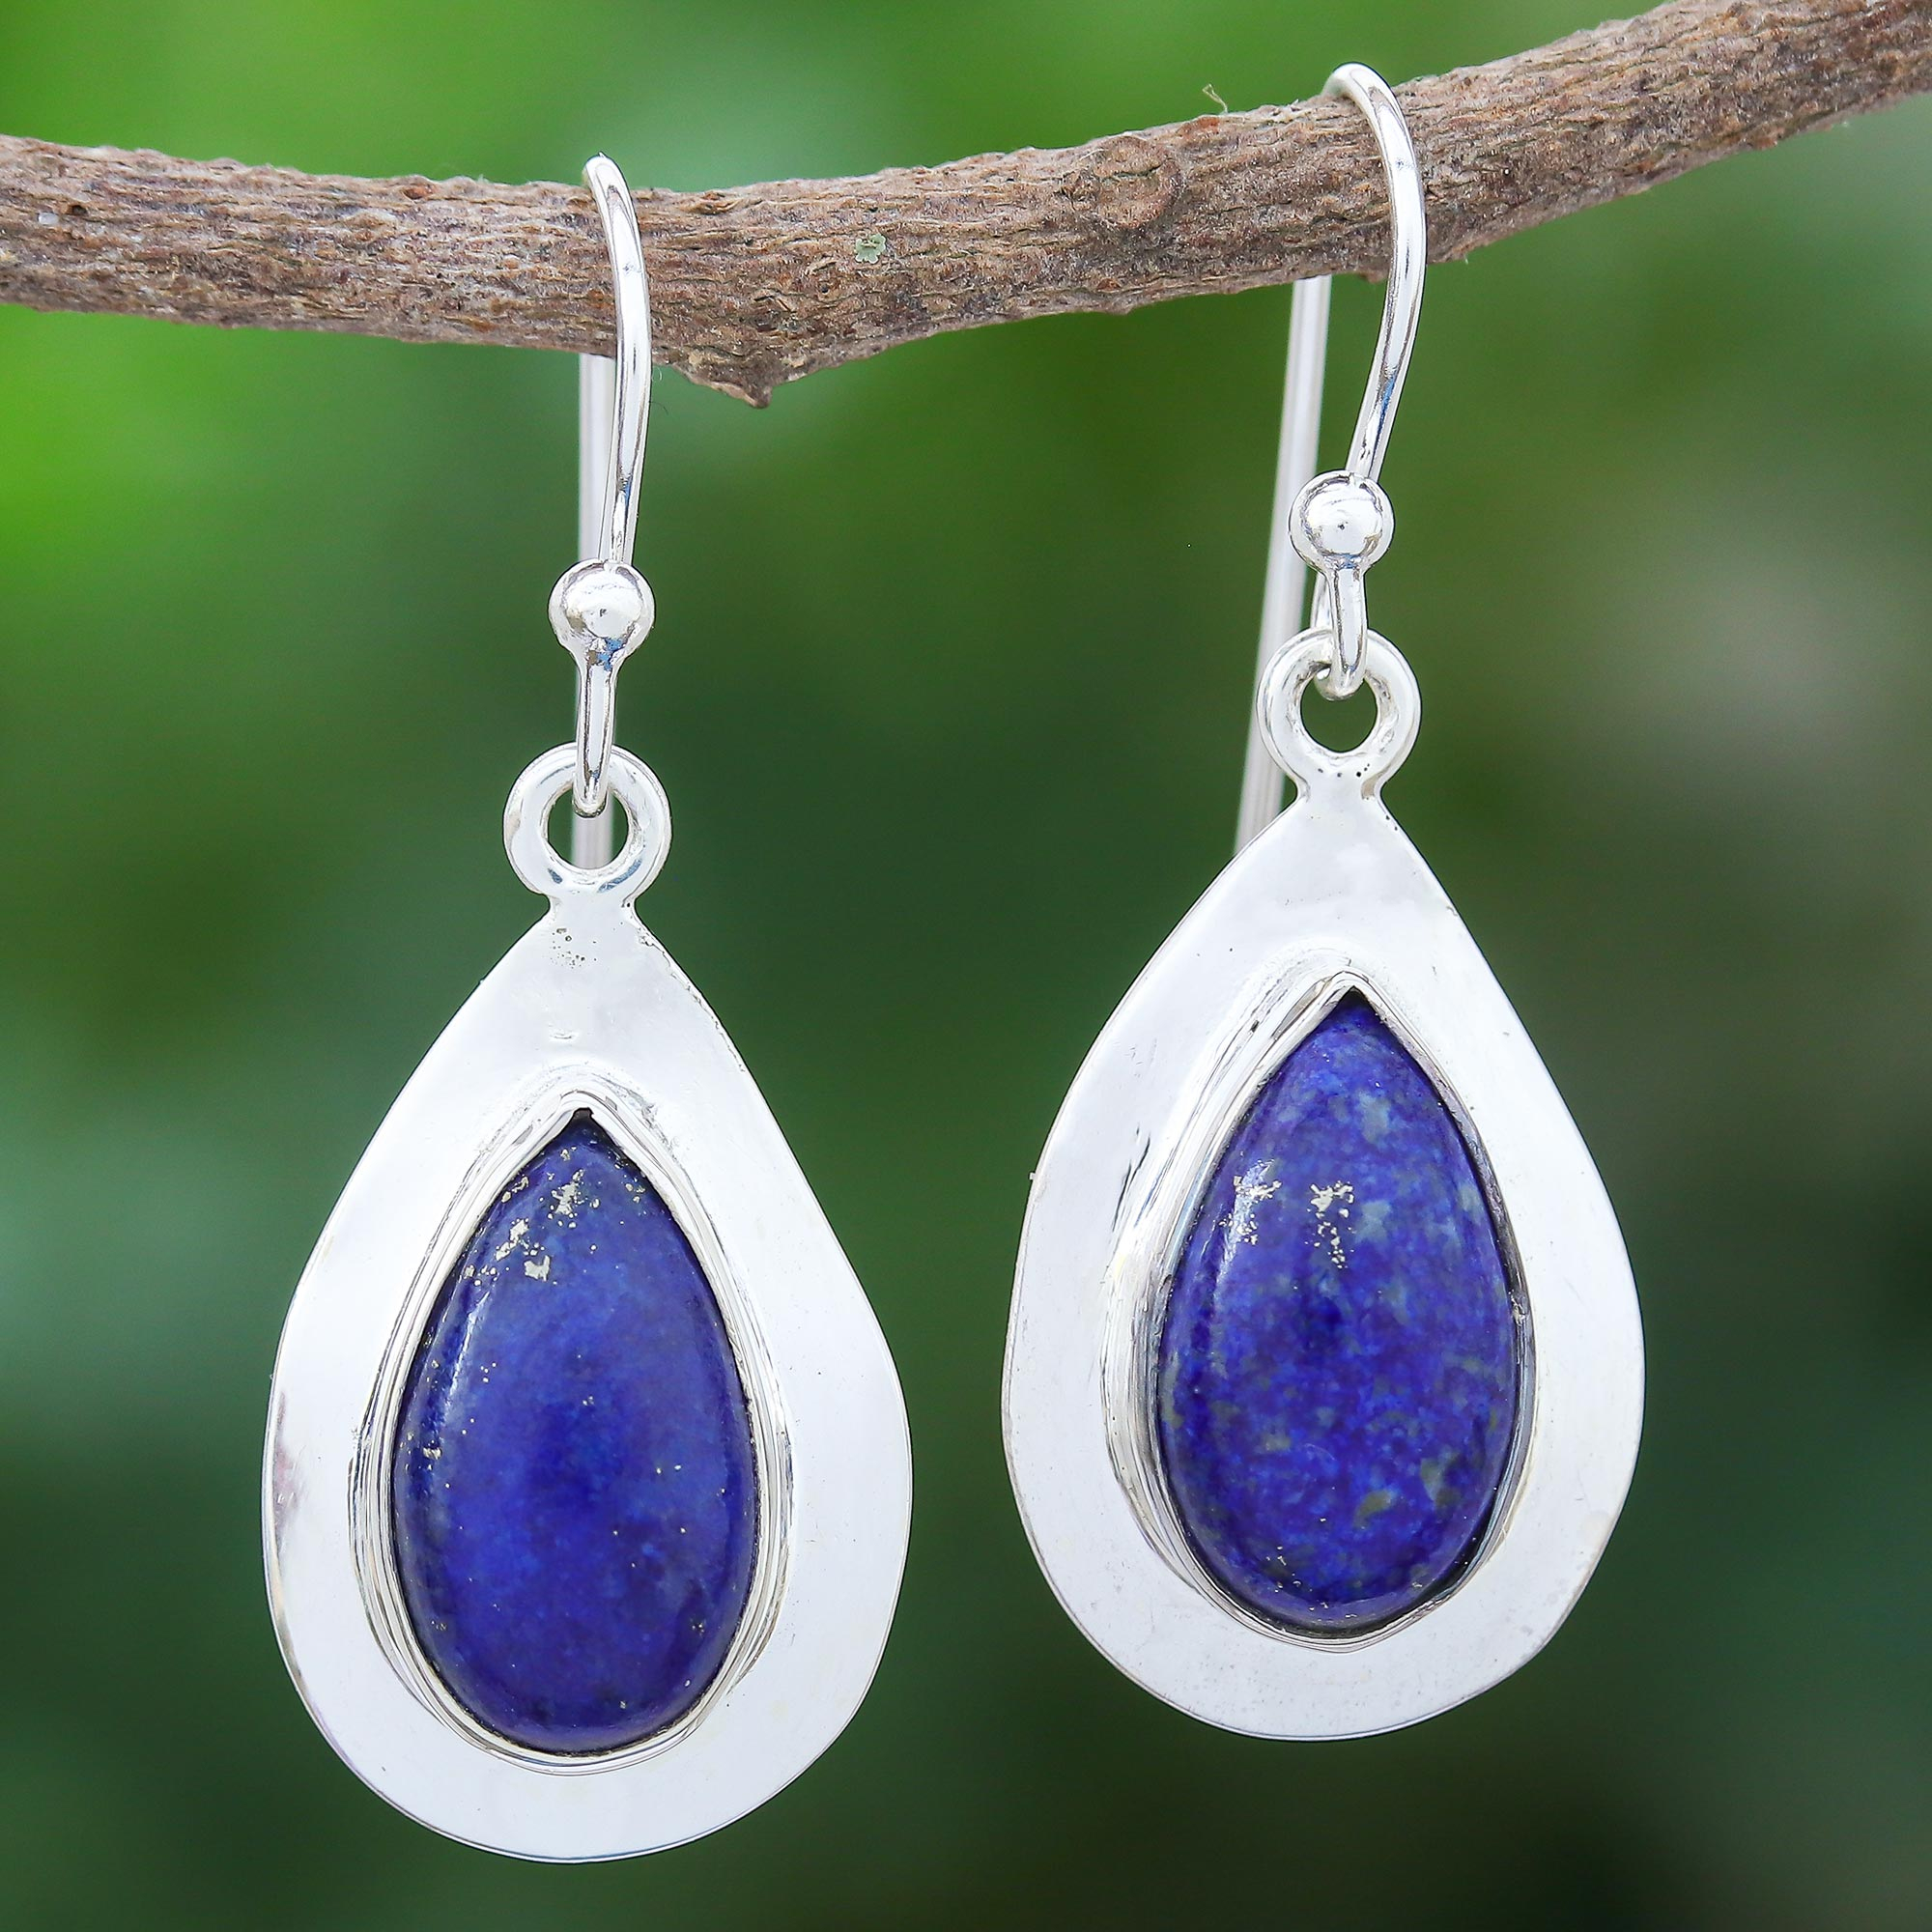 Lapis lazuli satellite beads sterling silver shepherd hook earrings